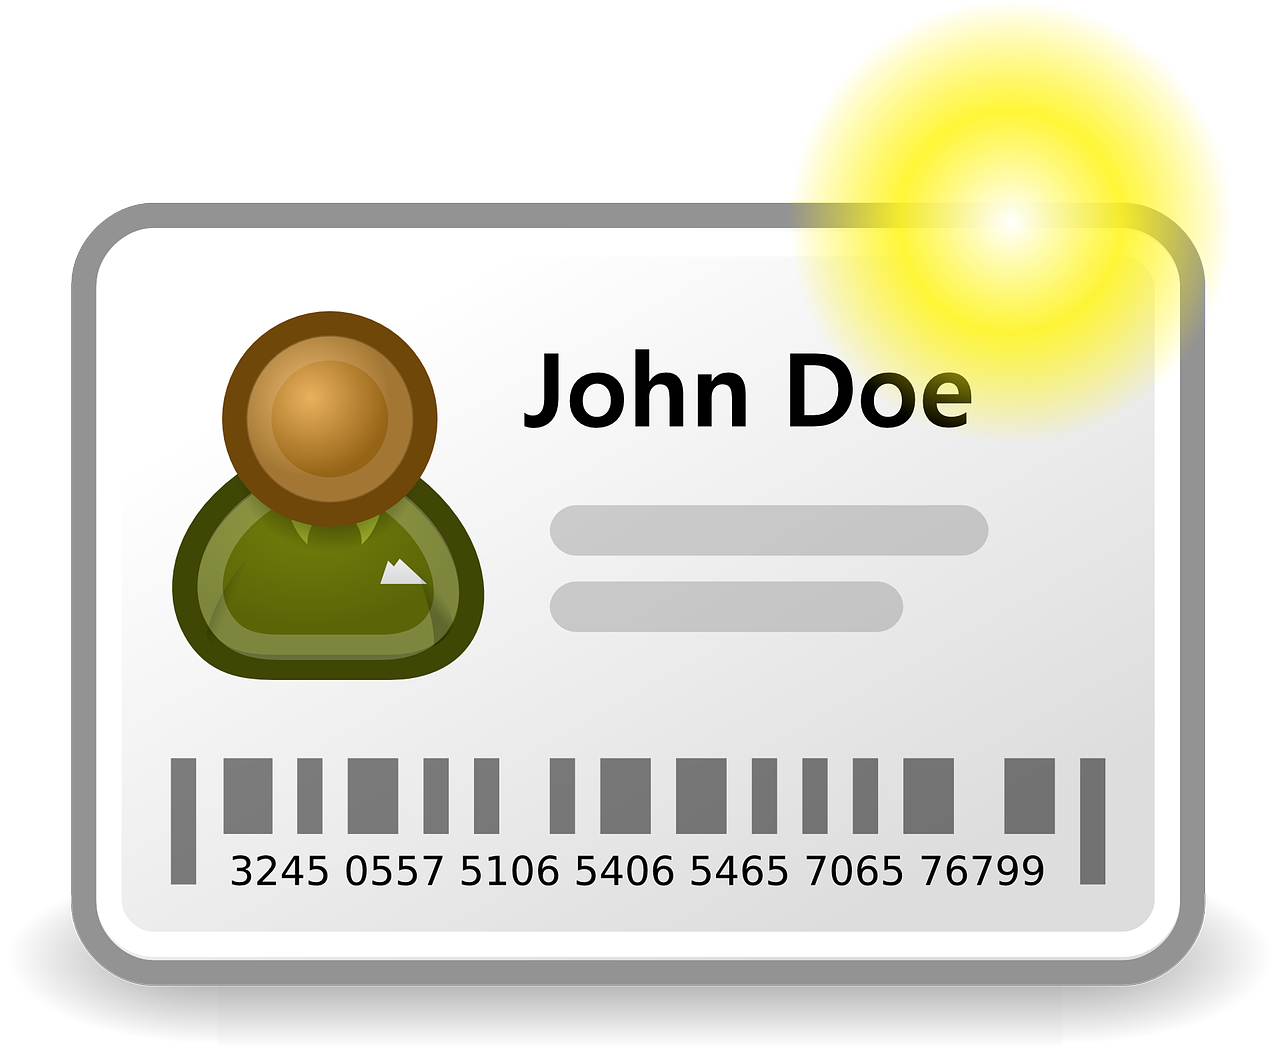 An illustration of John Doe's ID